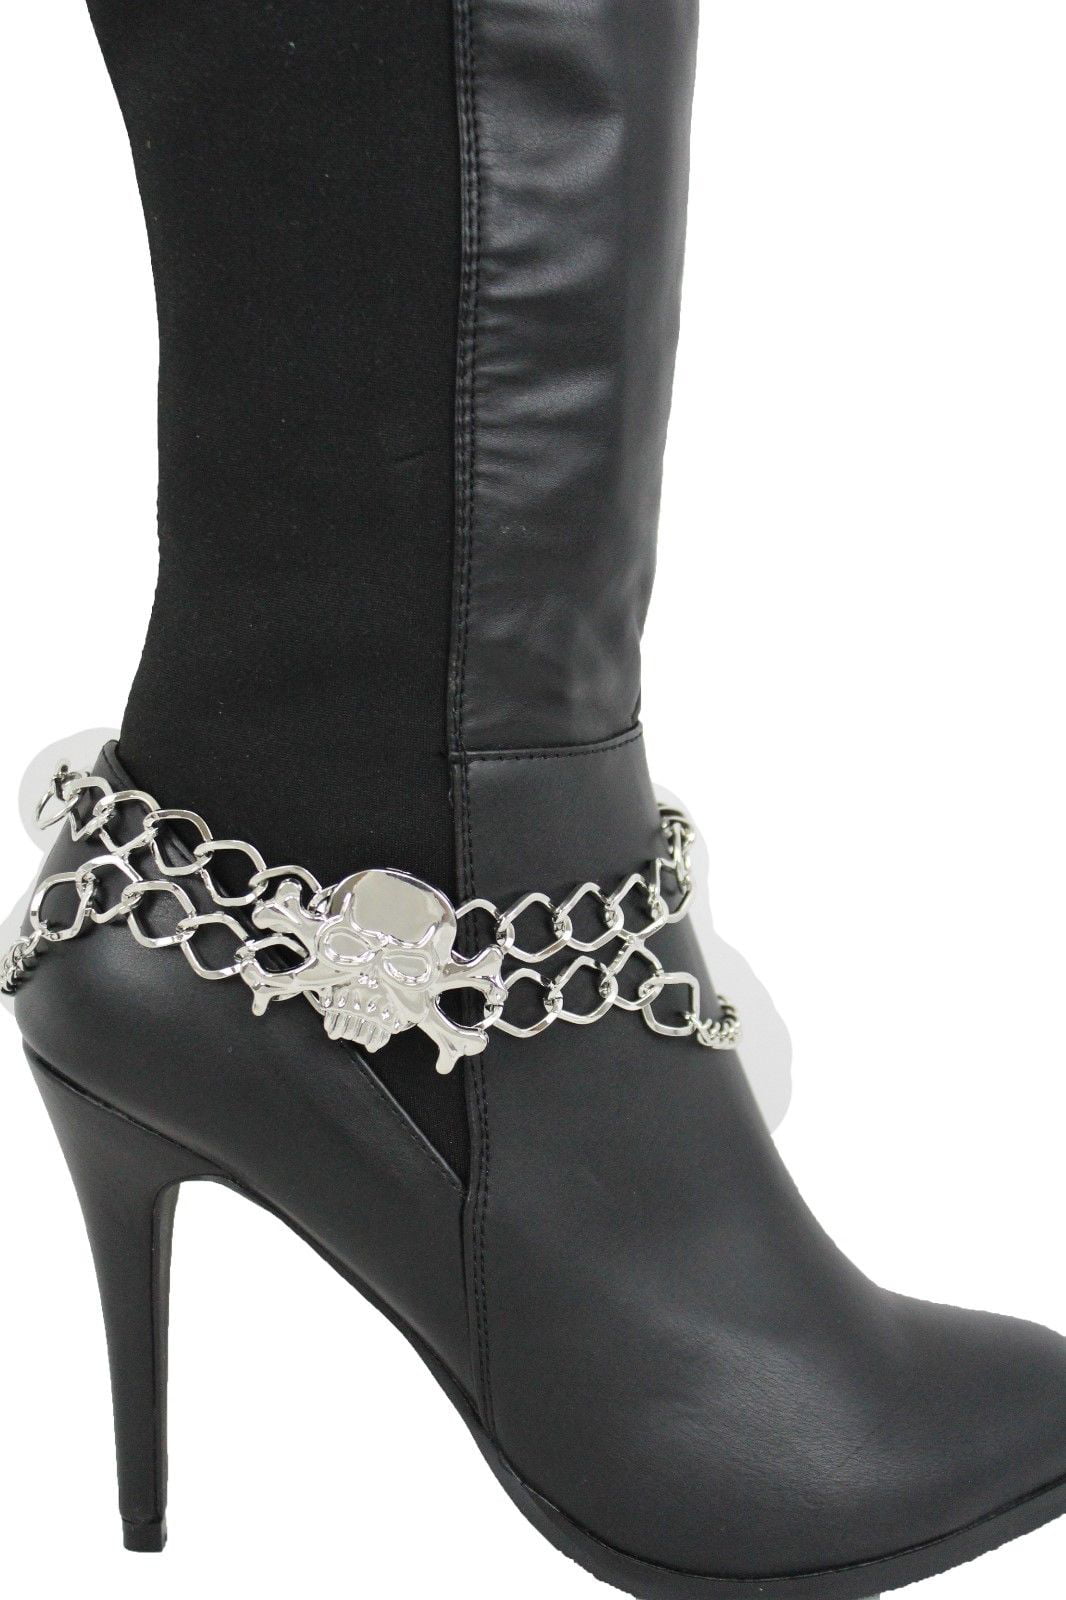 rhinestone boot jewelry Dainty silver & rhinestone double strand boot bling